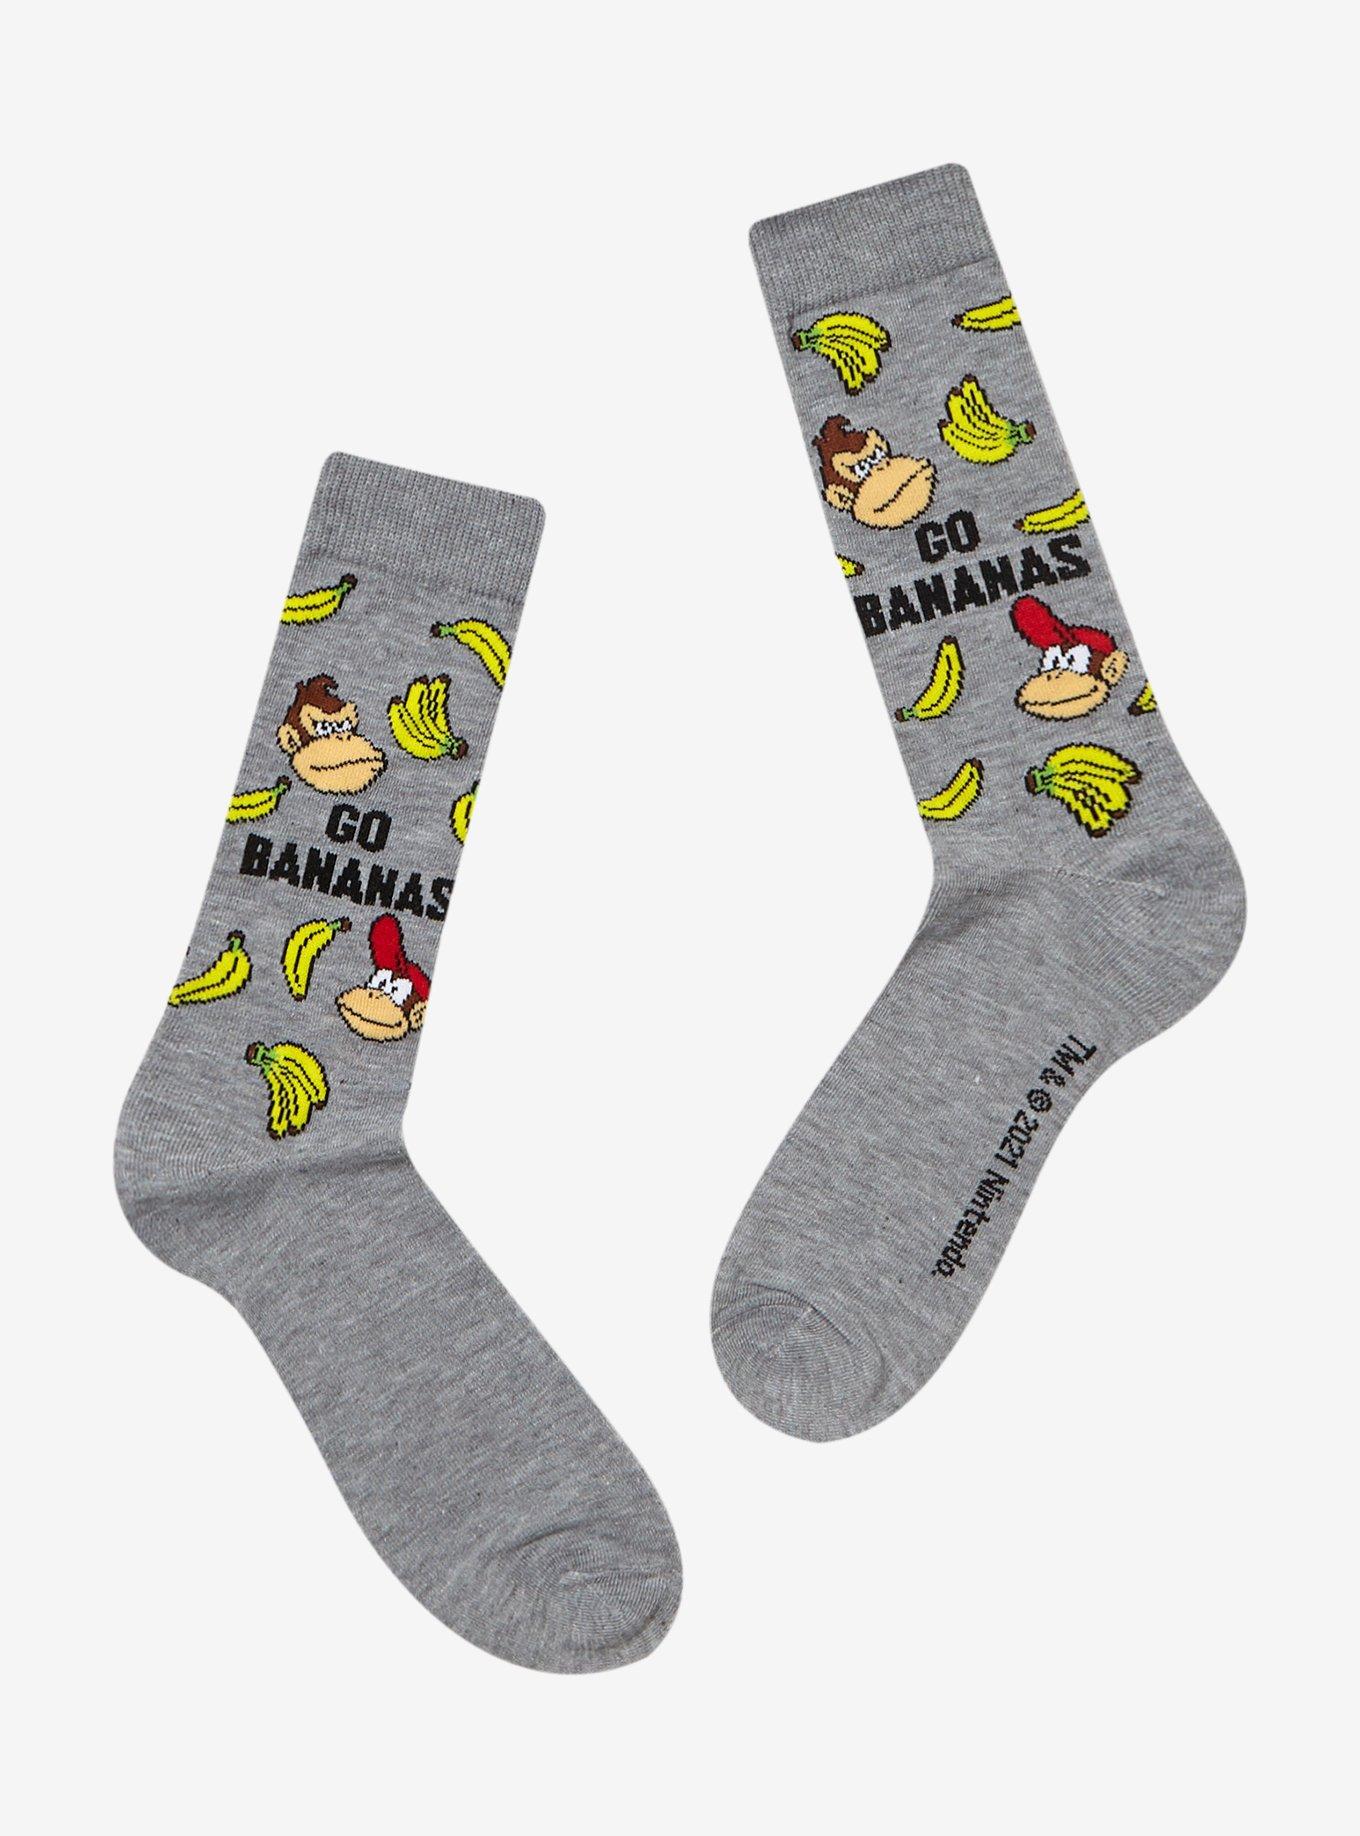 Donkey Kong Go Bananas Crew Socks